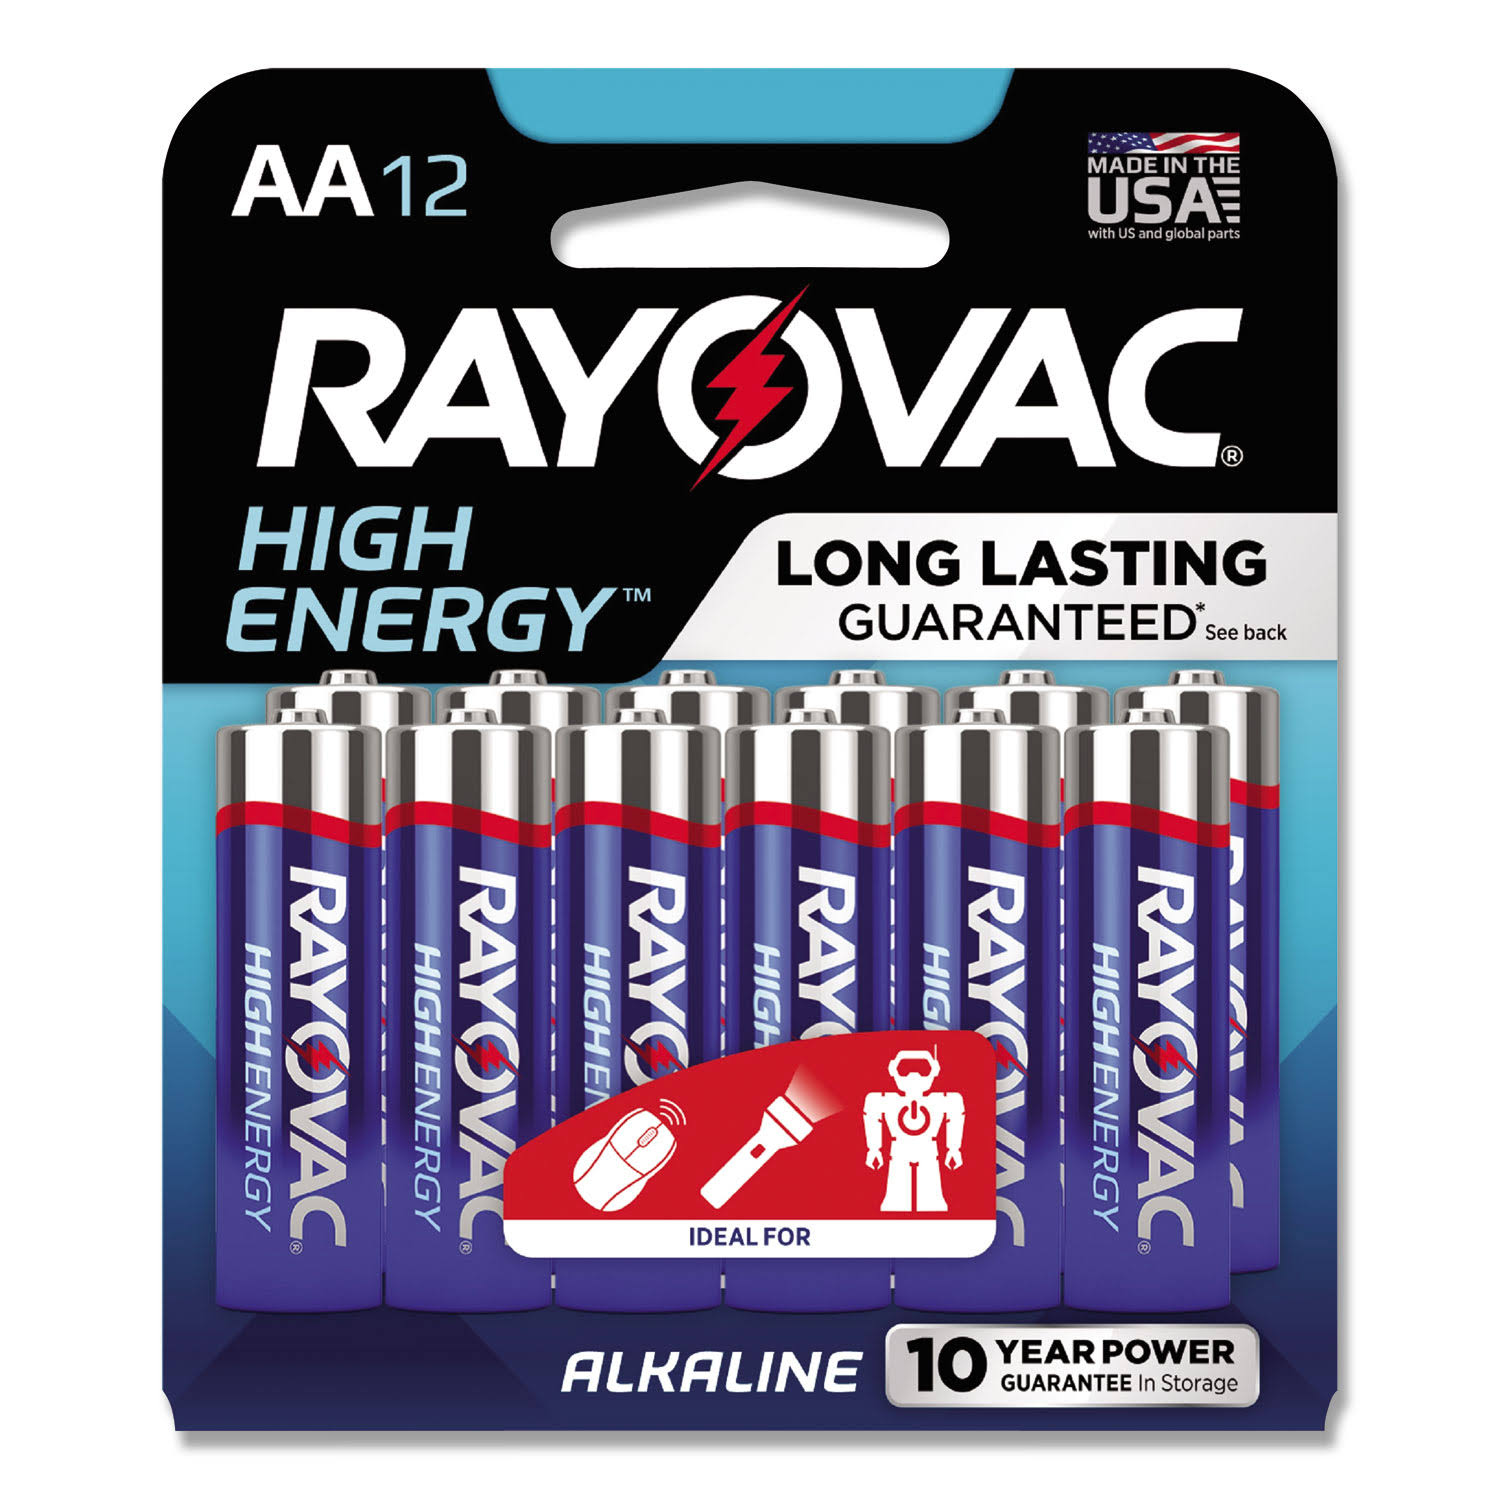 Rayovac High Energy Batteries, 815-12K, AA, 12pk, Alkaline